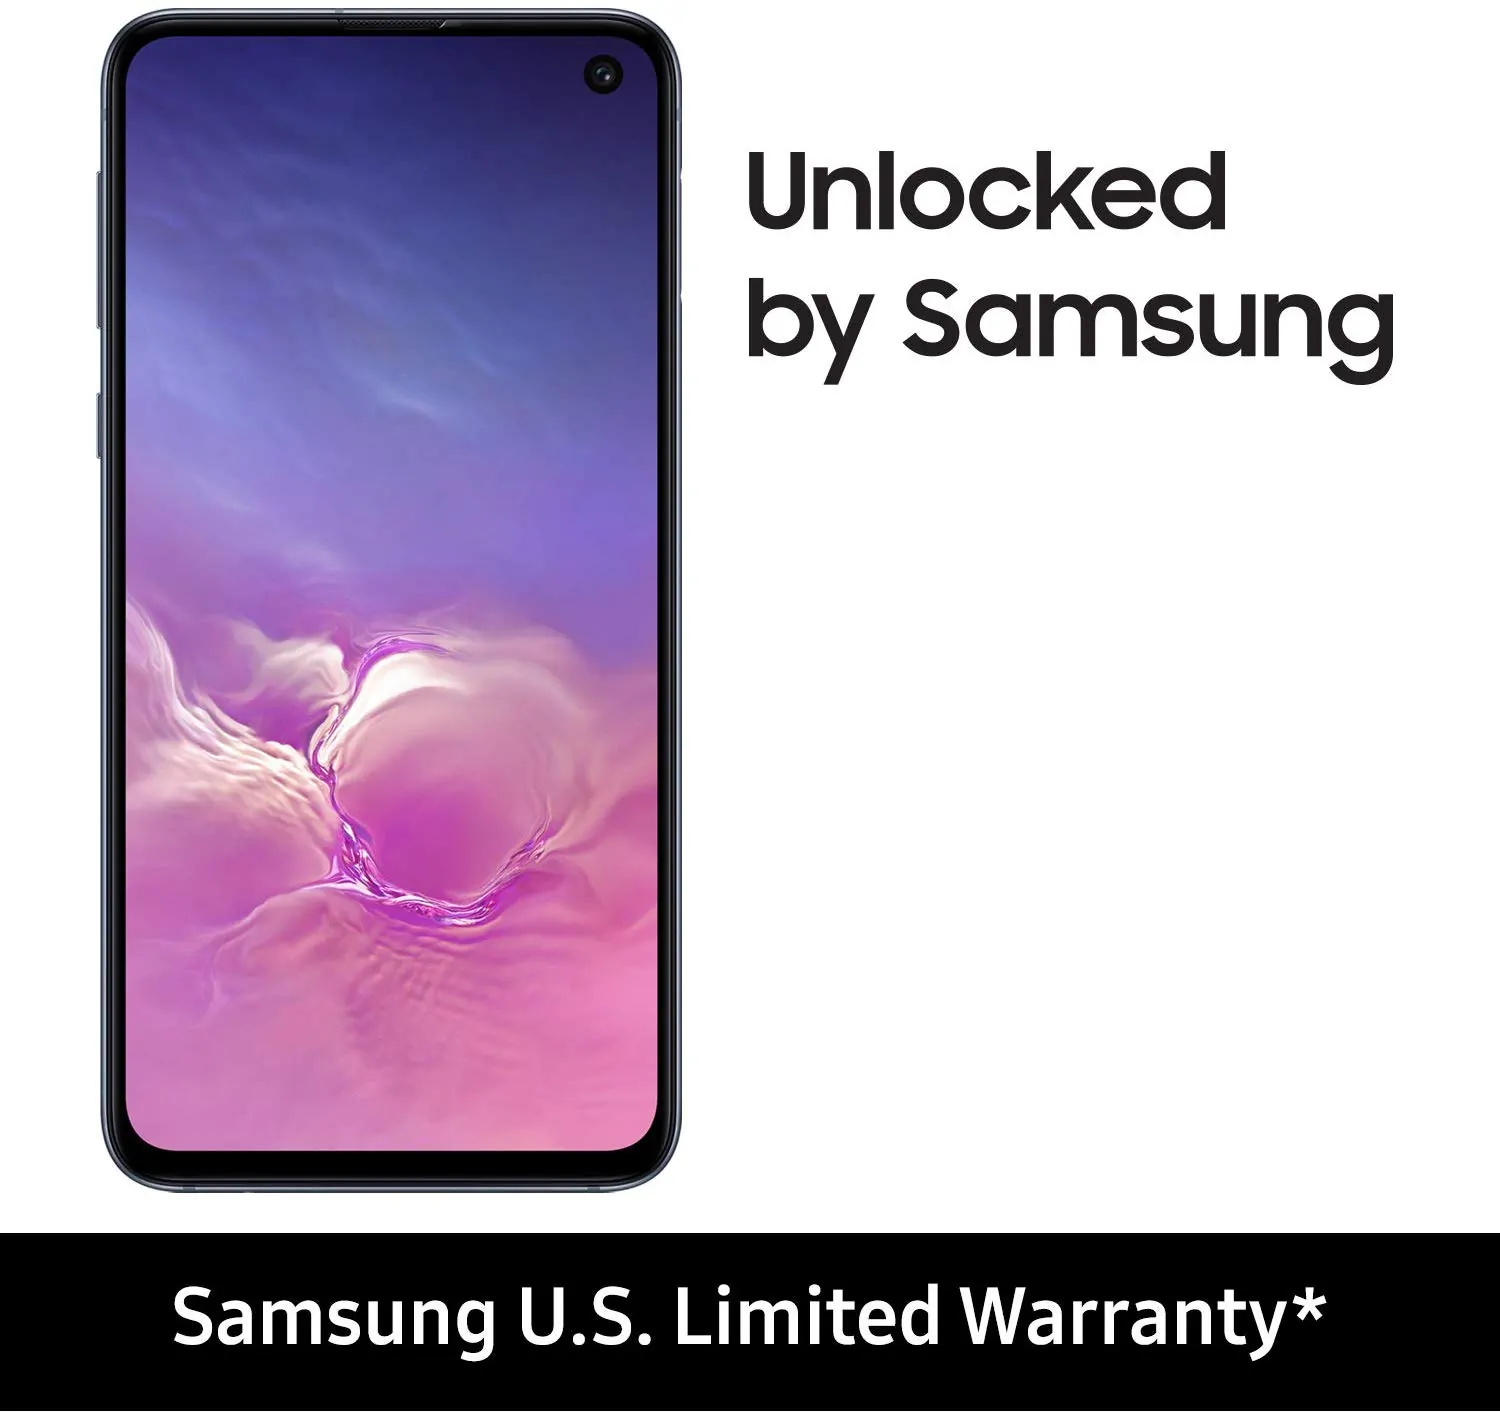 Samsung Galaxy S10e - Amazon